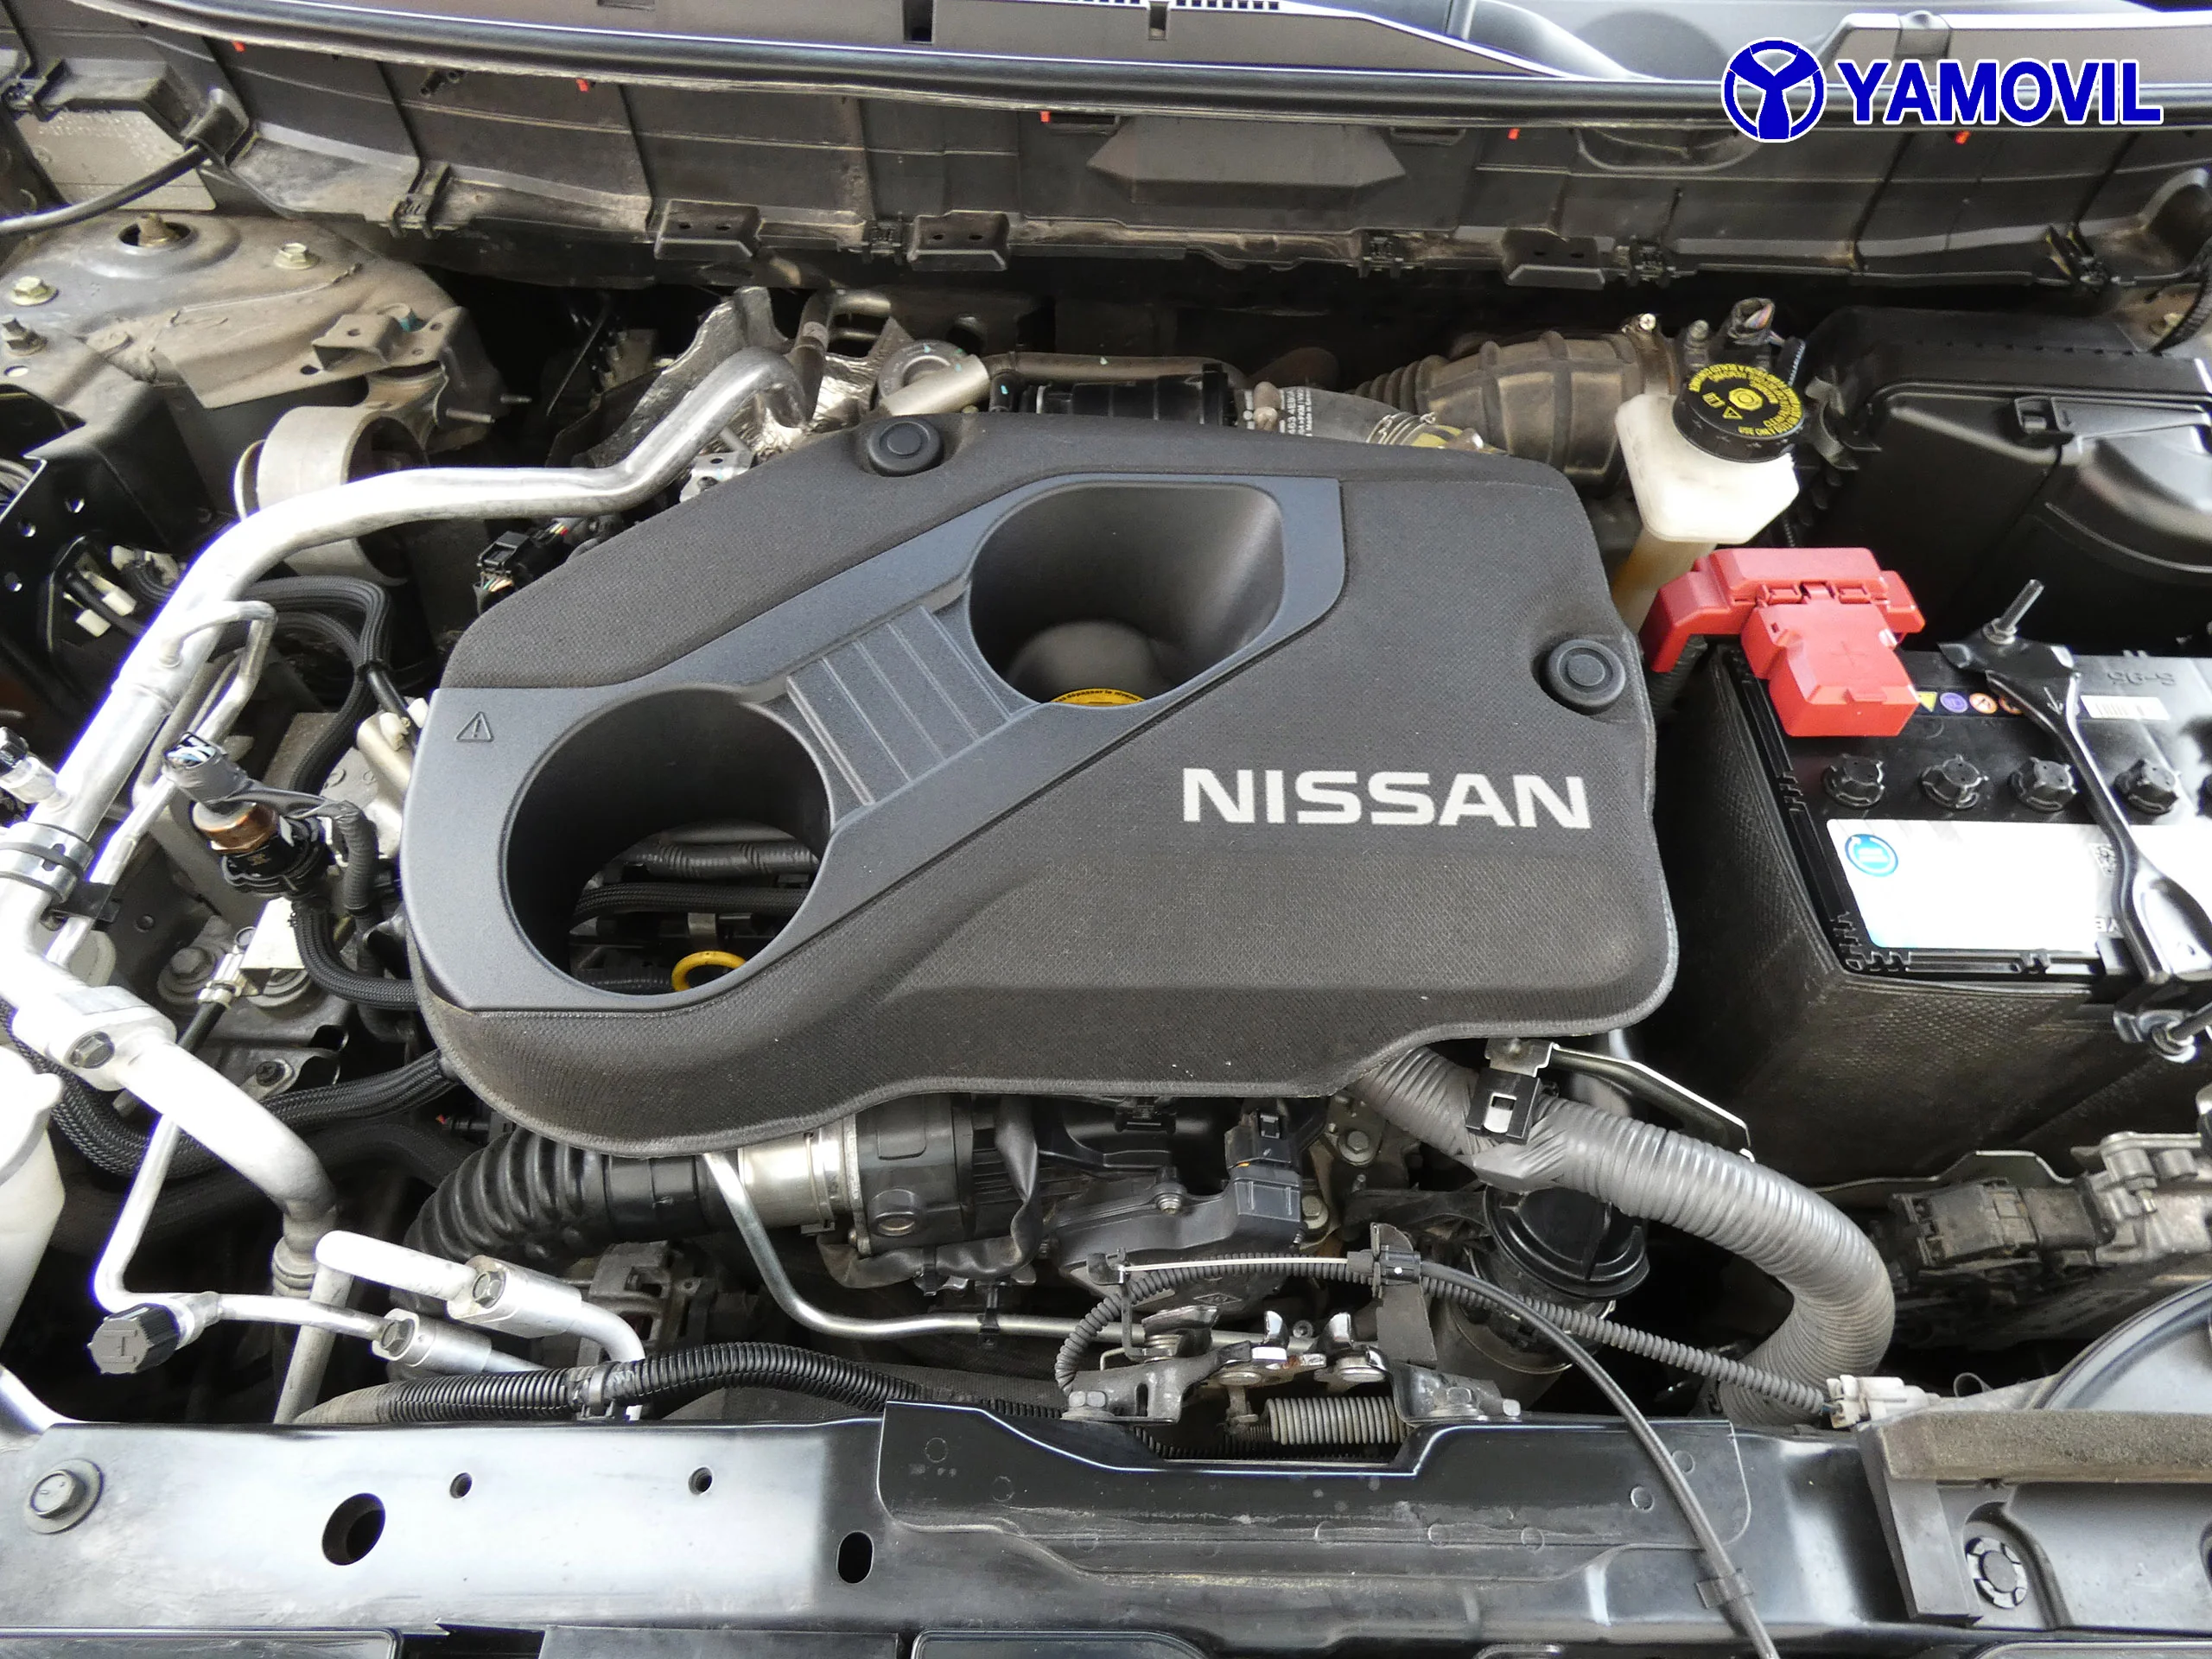 Nissan X-Trail 1.6 DCI TEKNA 4X4 PACK NAVI+TCUERO+TECHOP 5P - Foto 7